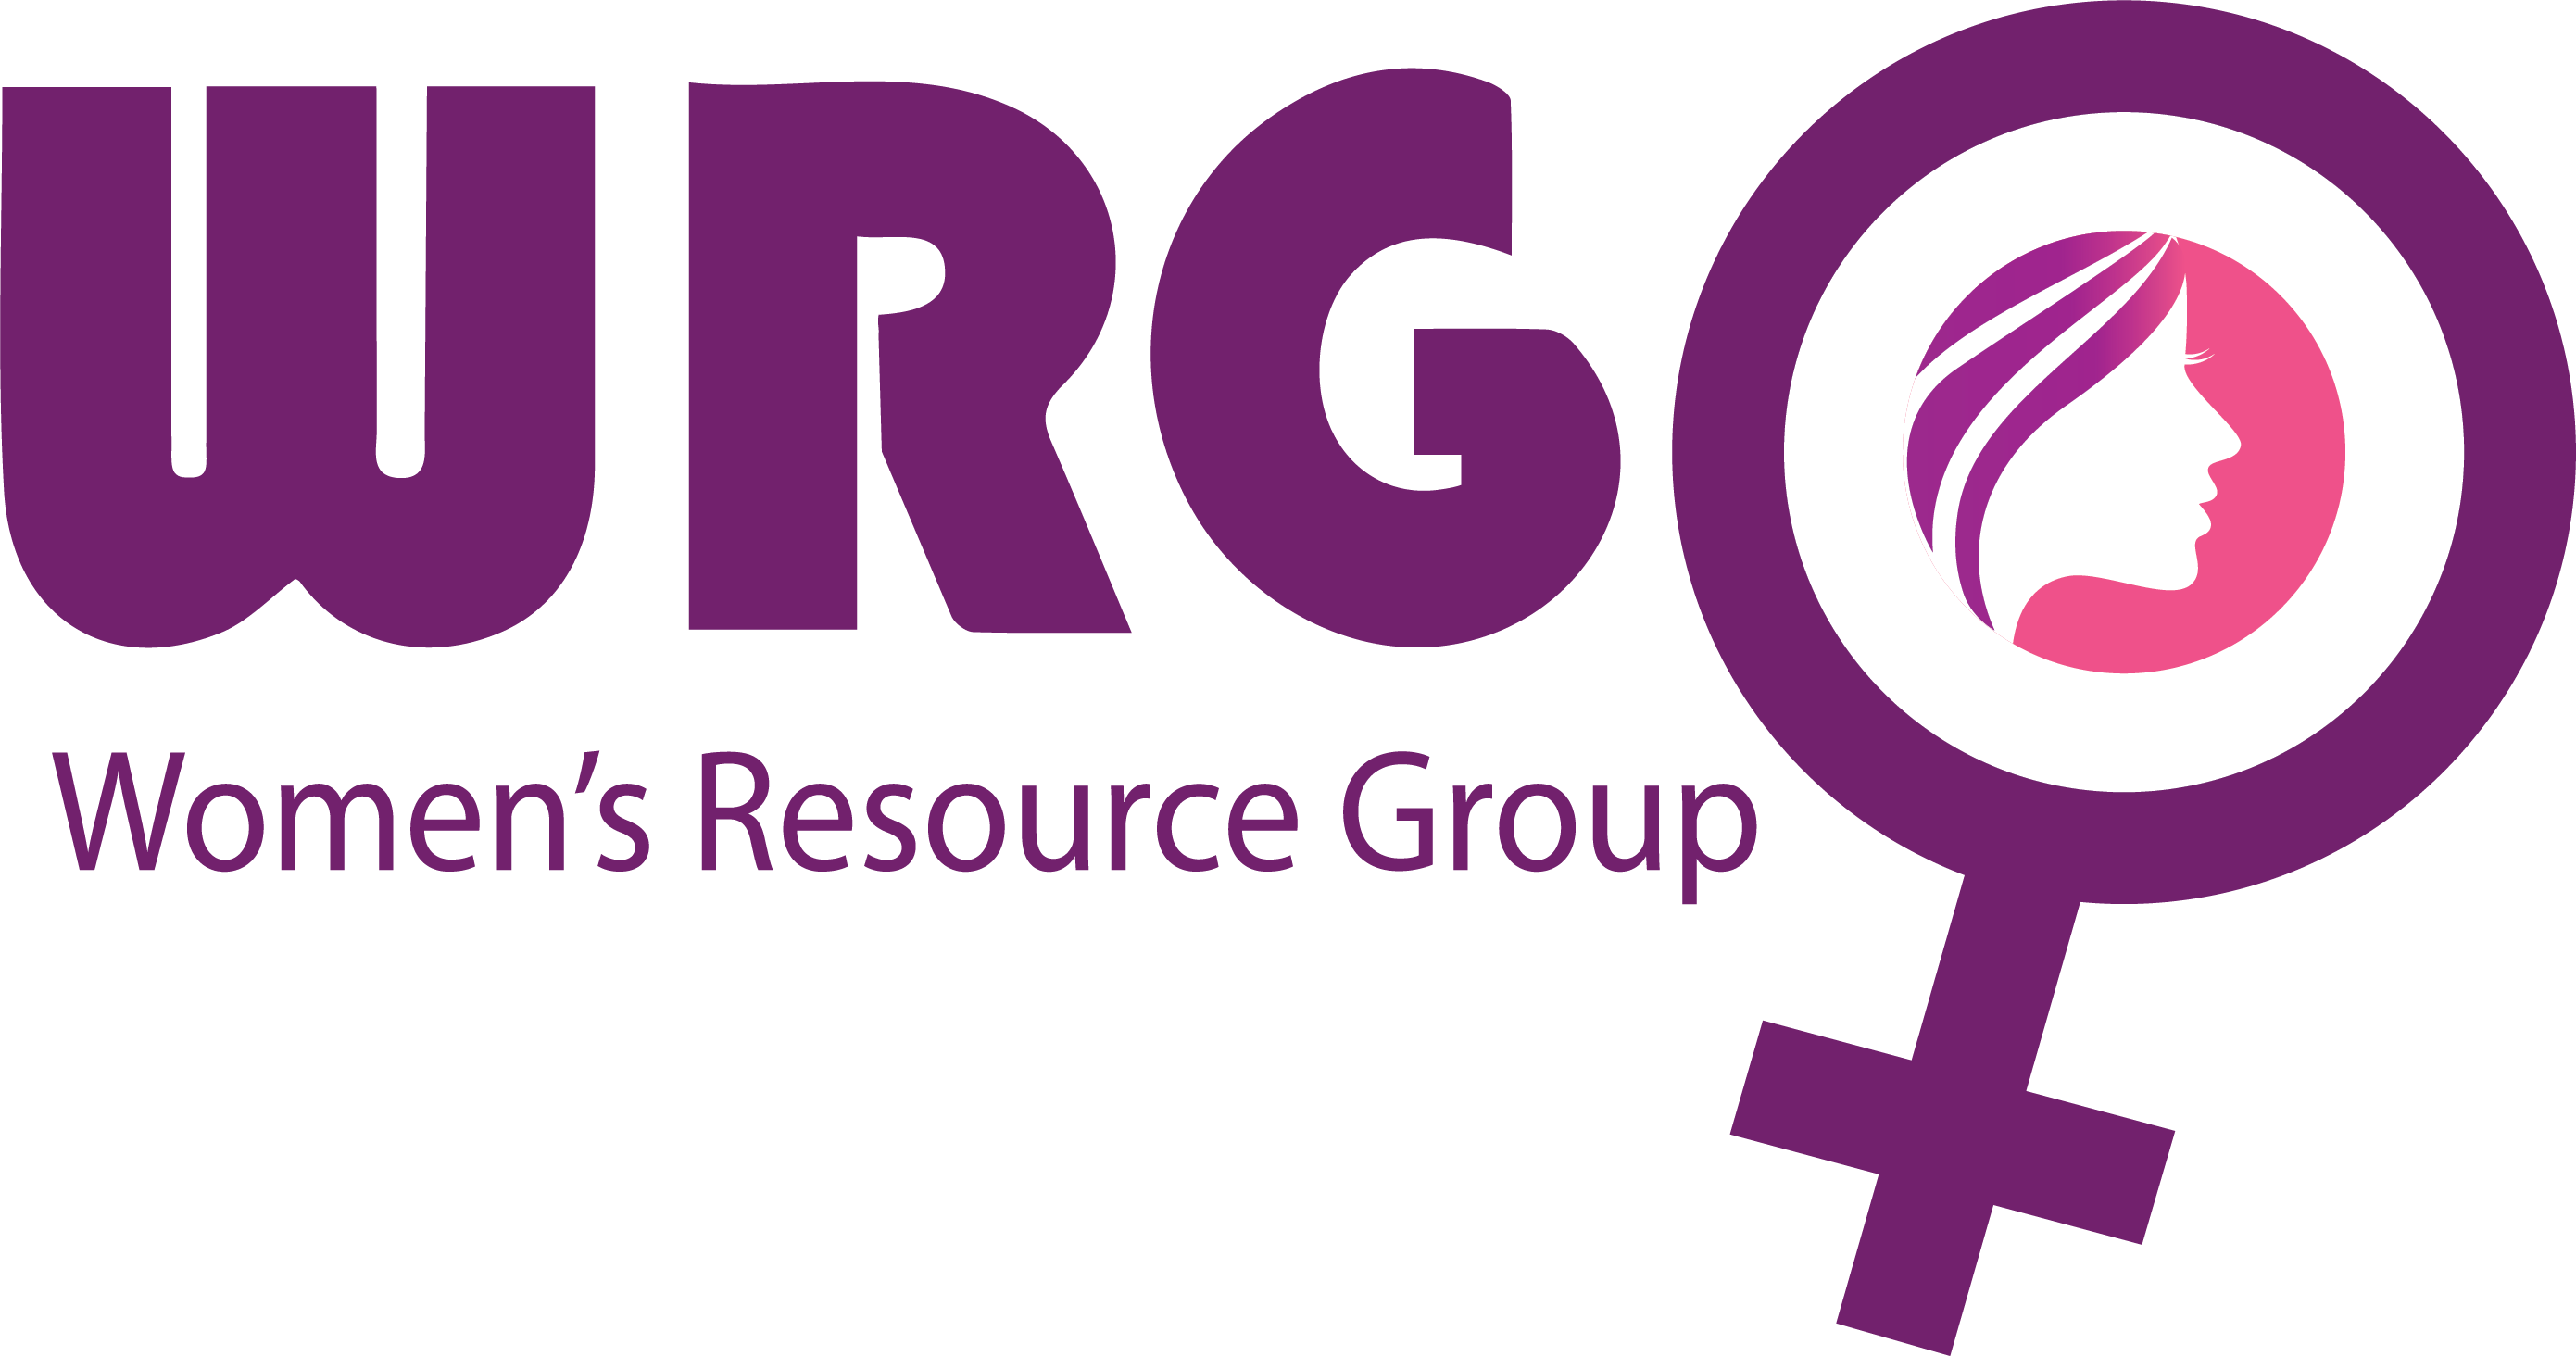 WRG - Women's Resource Group